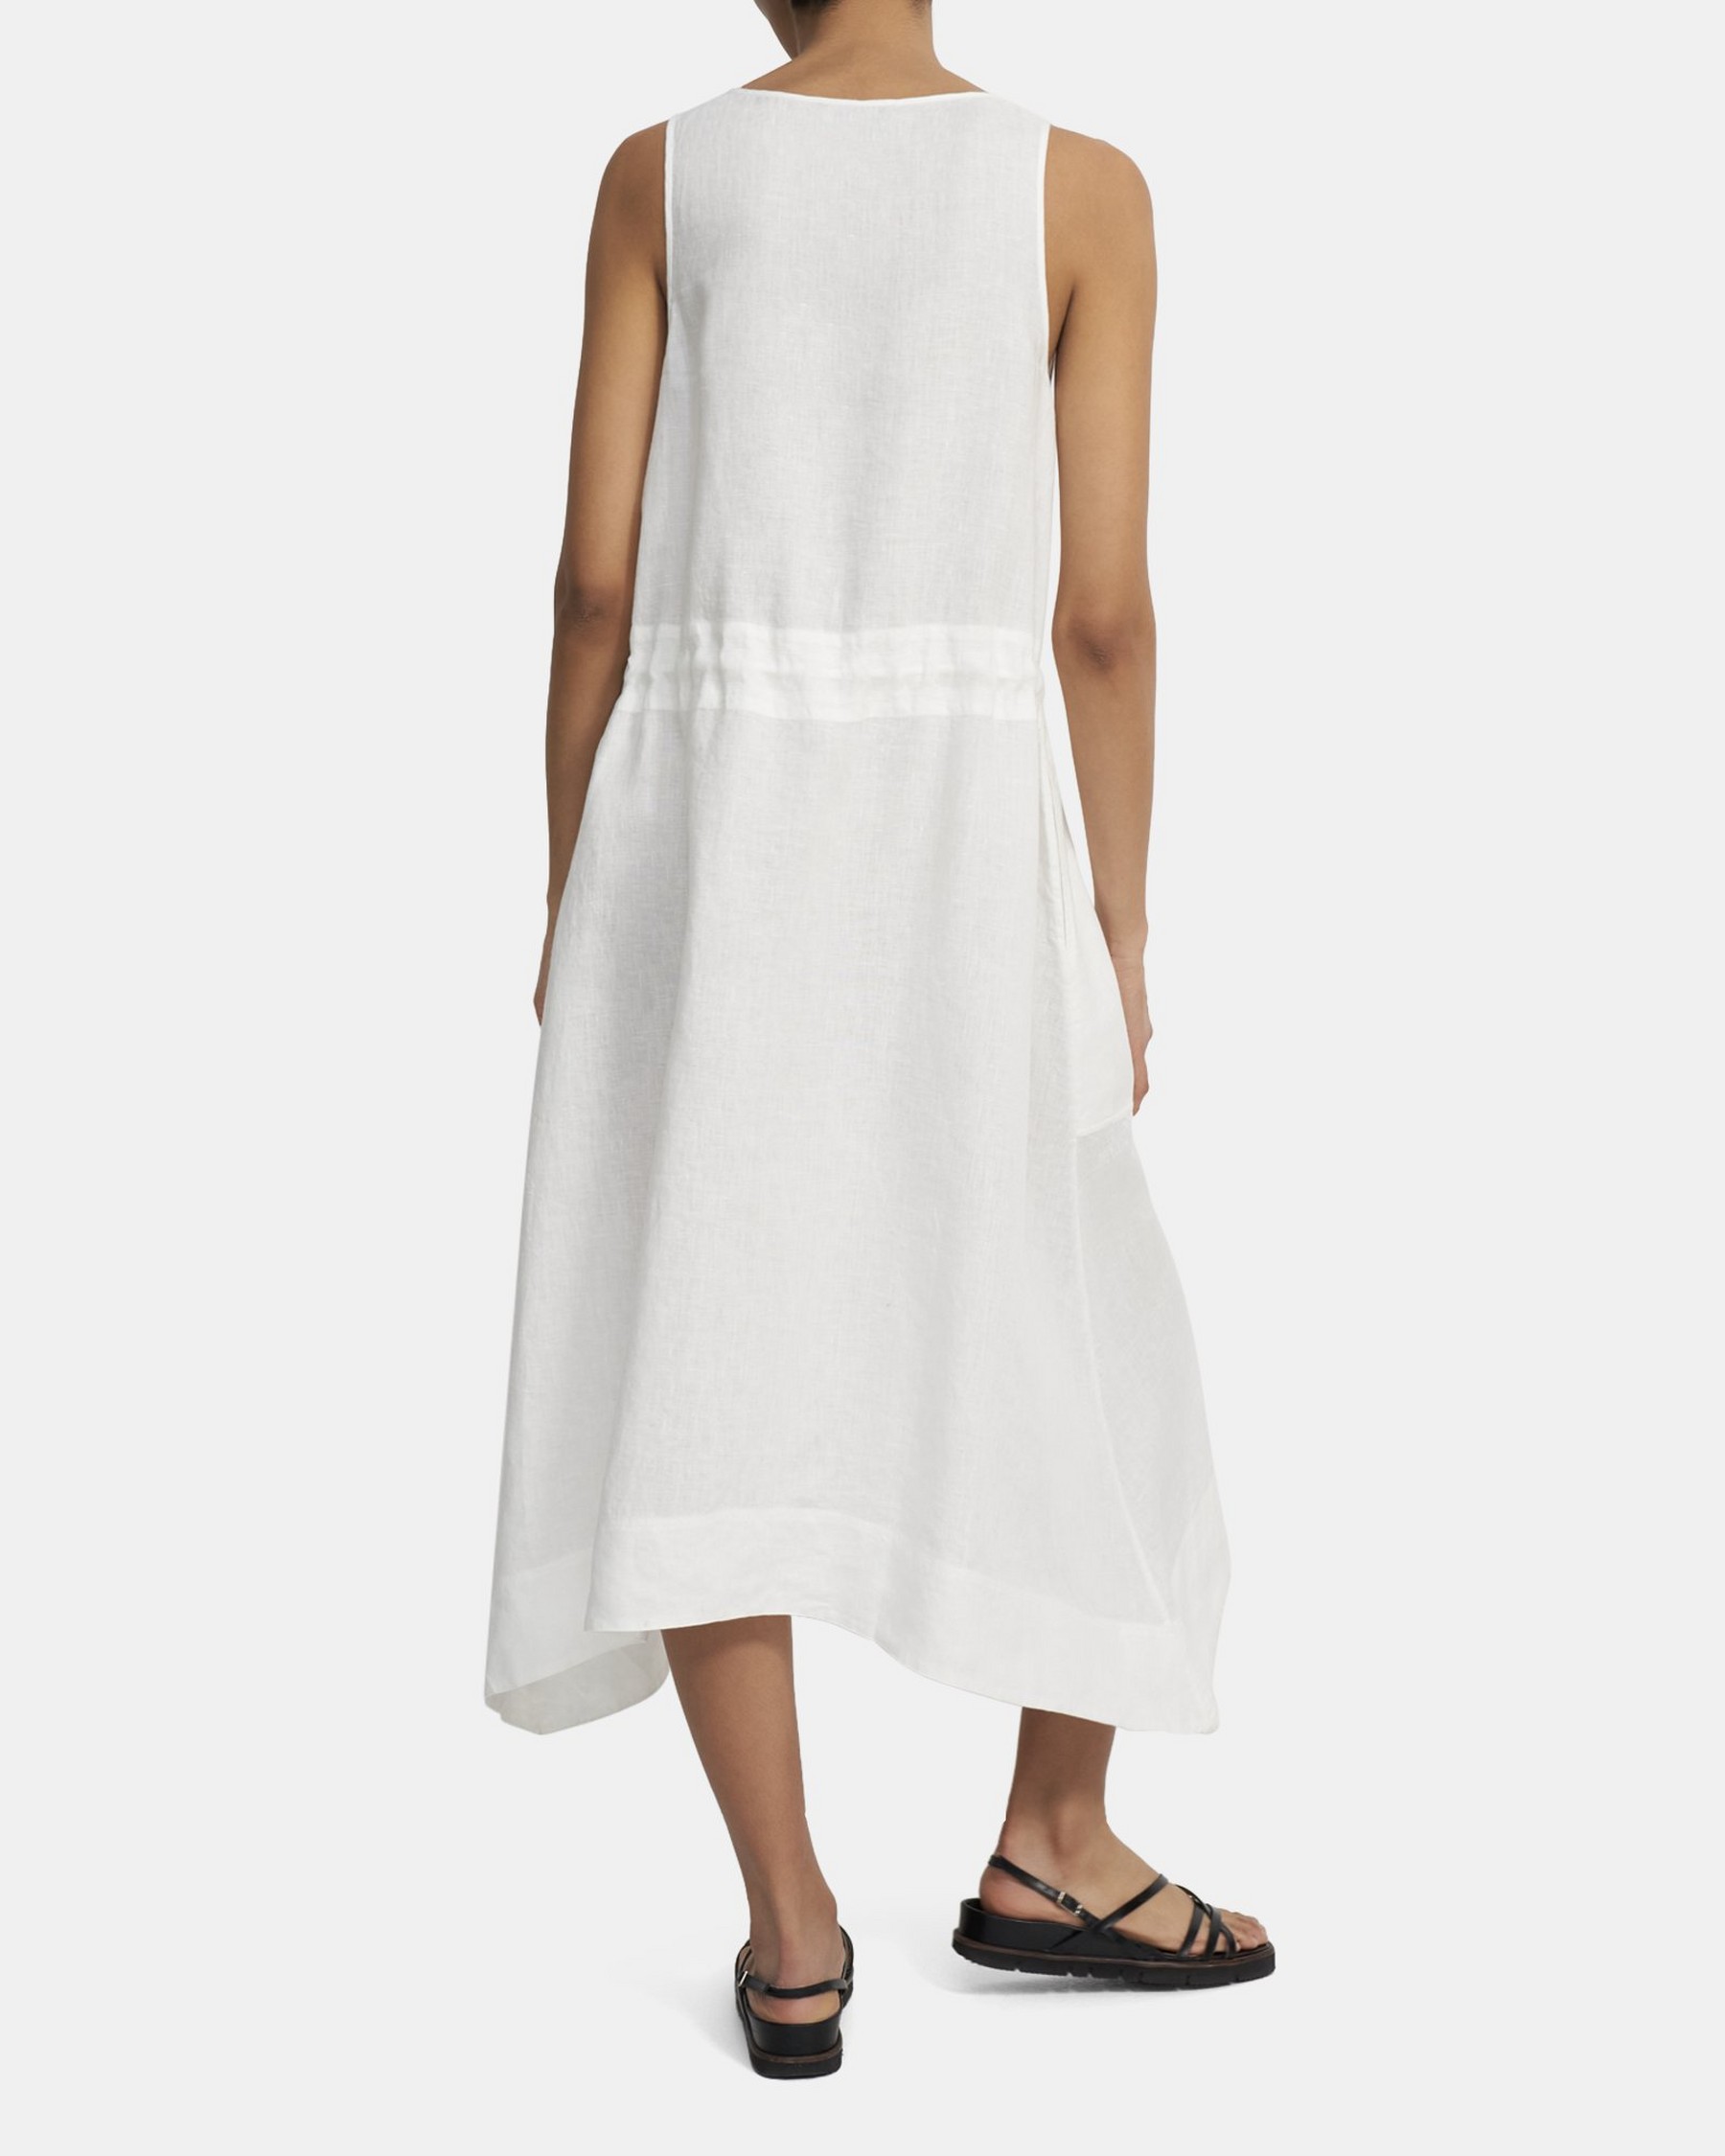 theory.com | Handkerchief Dress in Spring Linen